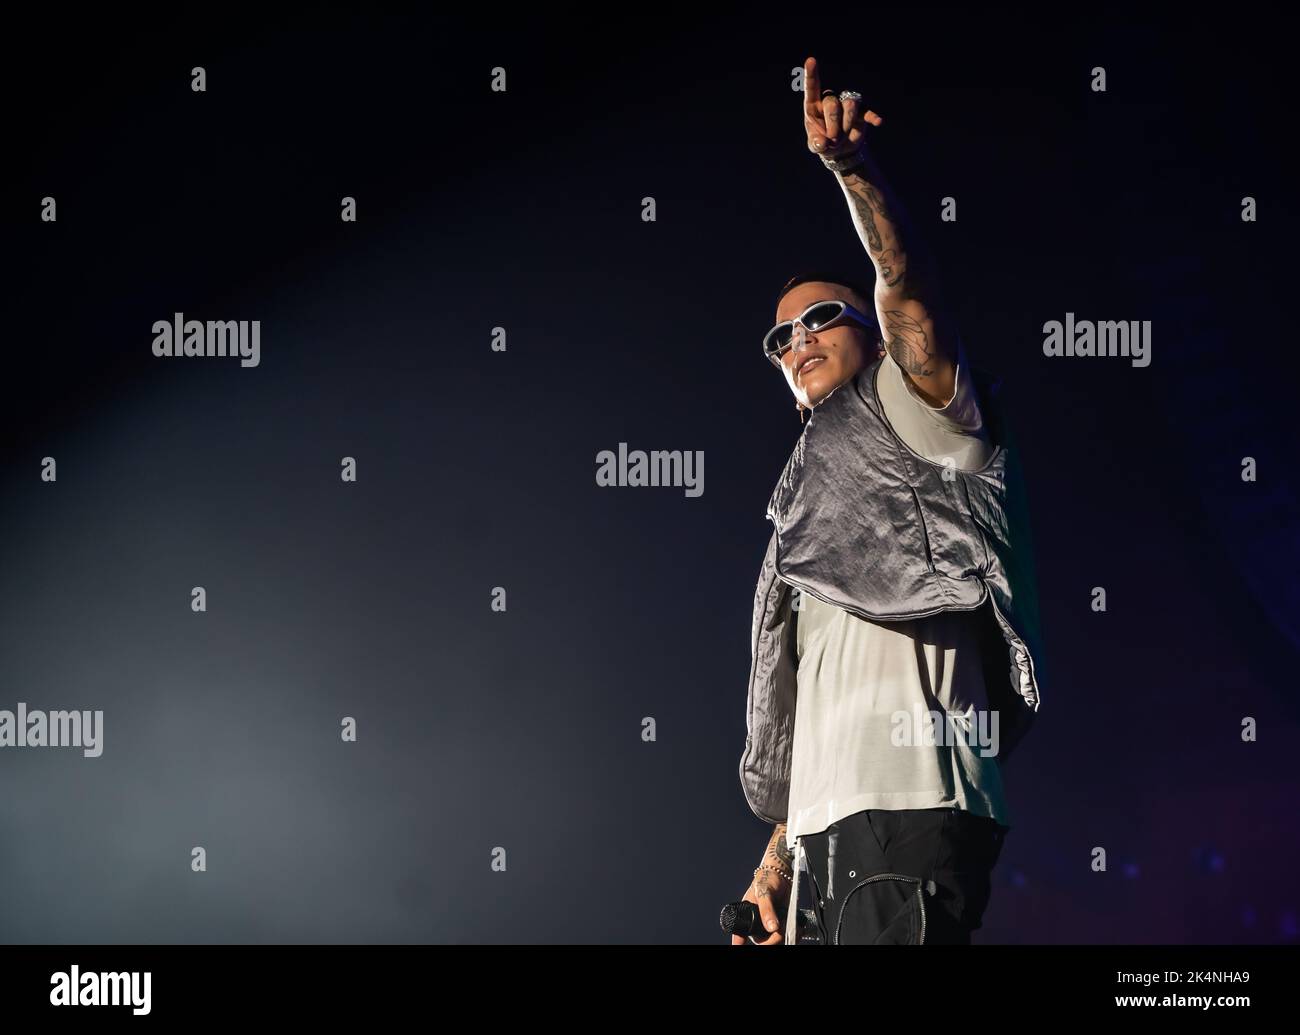 Eboli, Italy. 02nd Oct, 2022. Sfera Ebbasta, italian rapper on stage of the Palasele in city of Eboli, Italy on Oct. 2, 2022. (Photo by Giovanni Esposito/Pacific Press/Sipa USA) Credit: Sipa USA/Alamy Live News Stock Photo